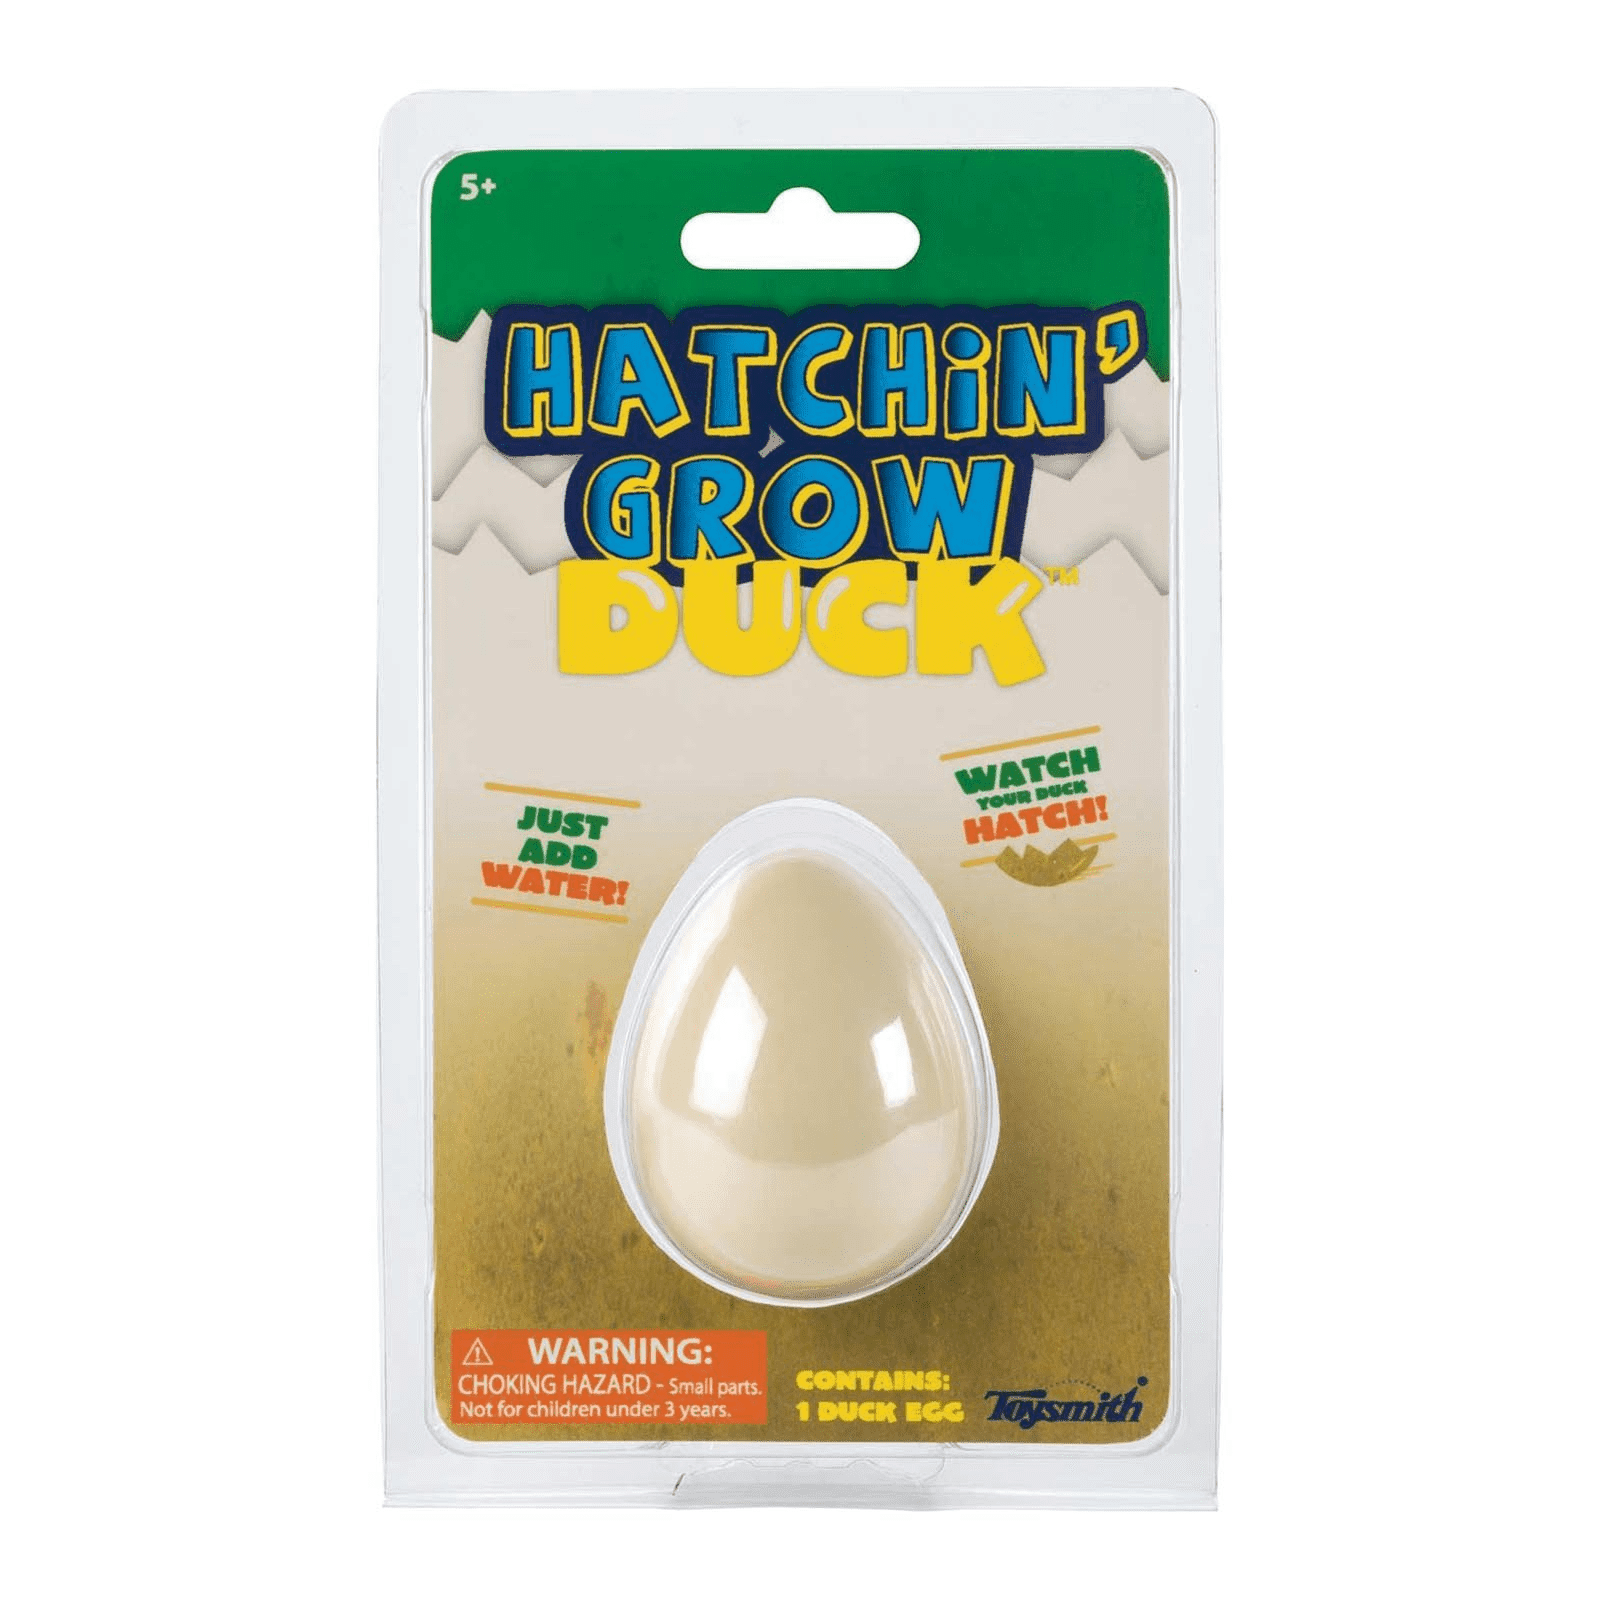 Hatchin Grow Duck-Kidding Around NYC